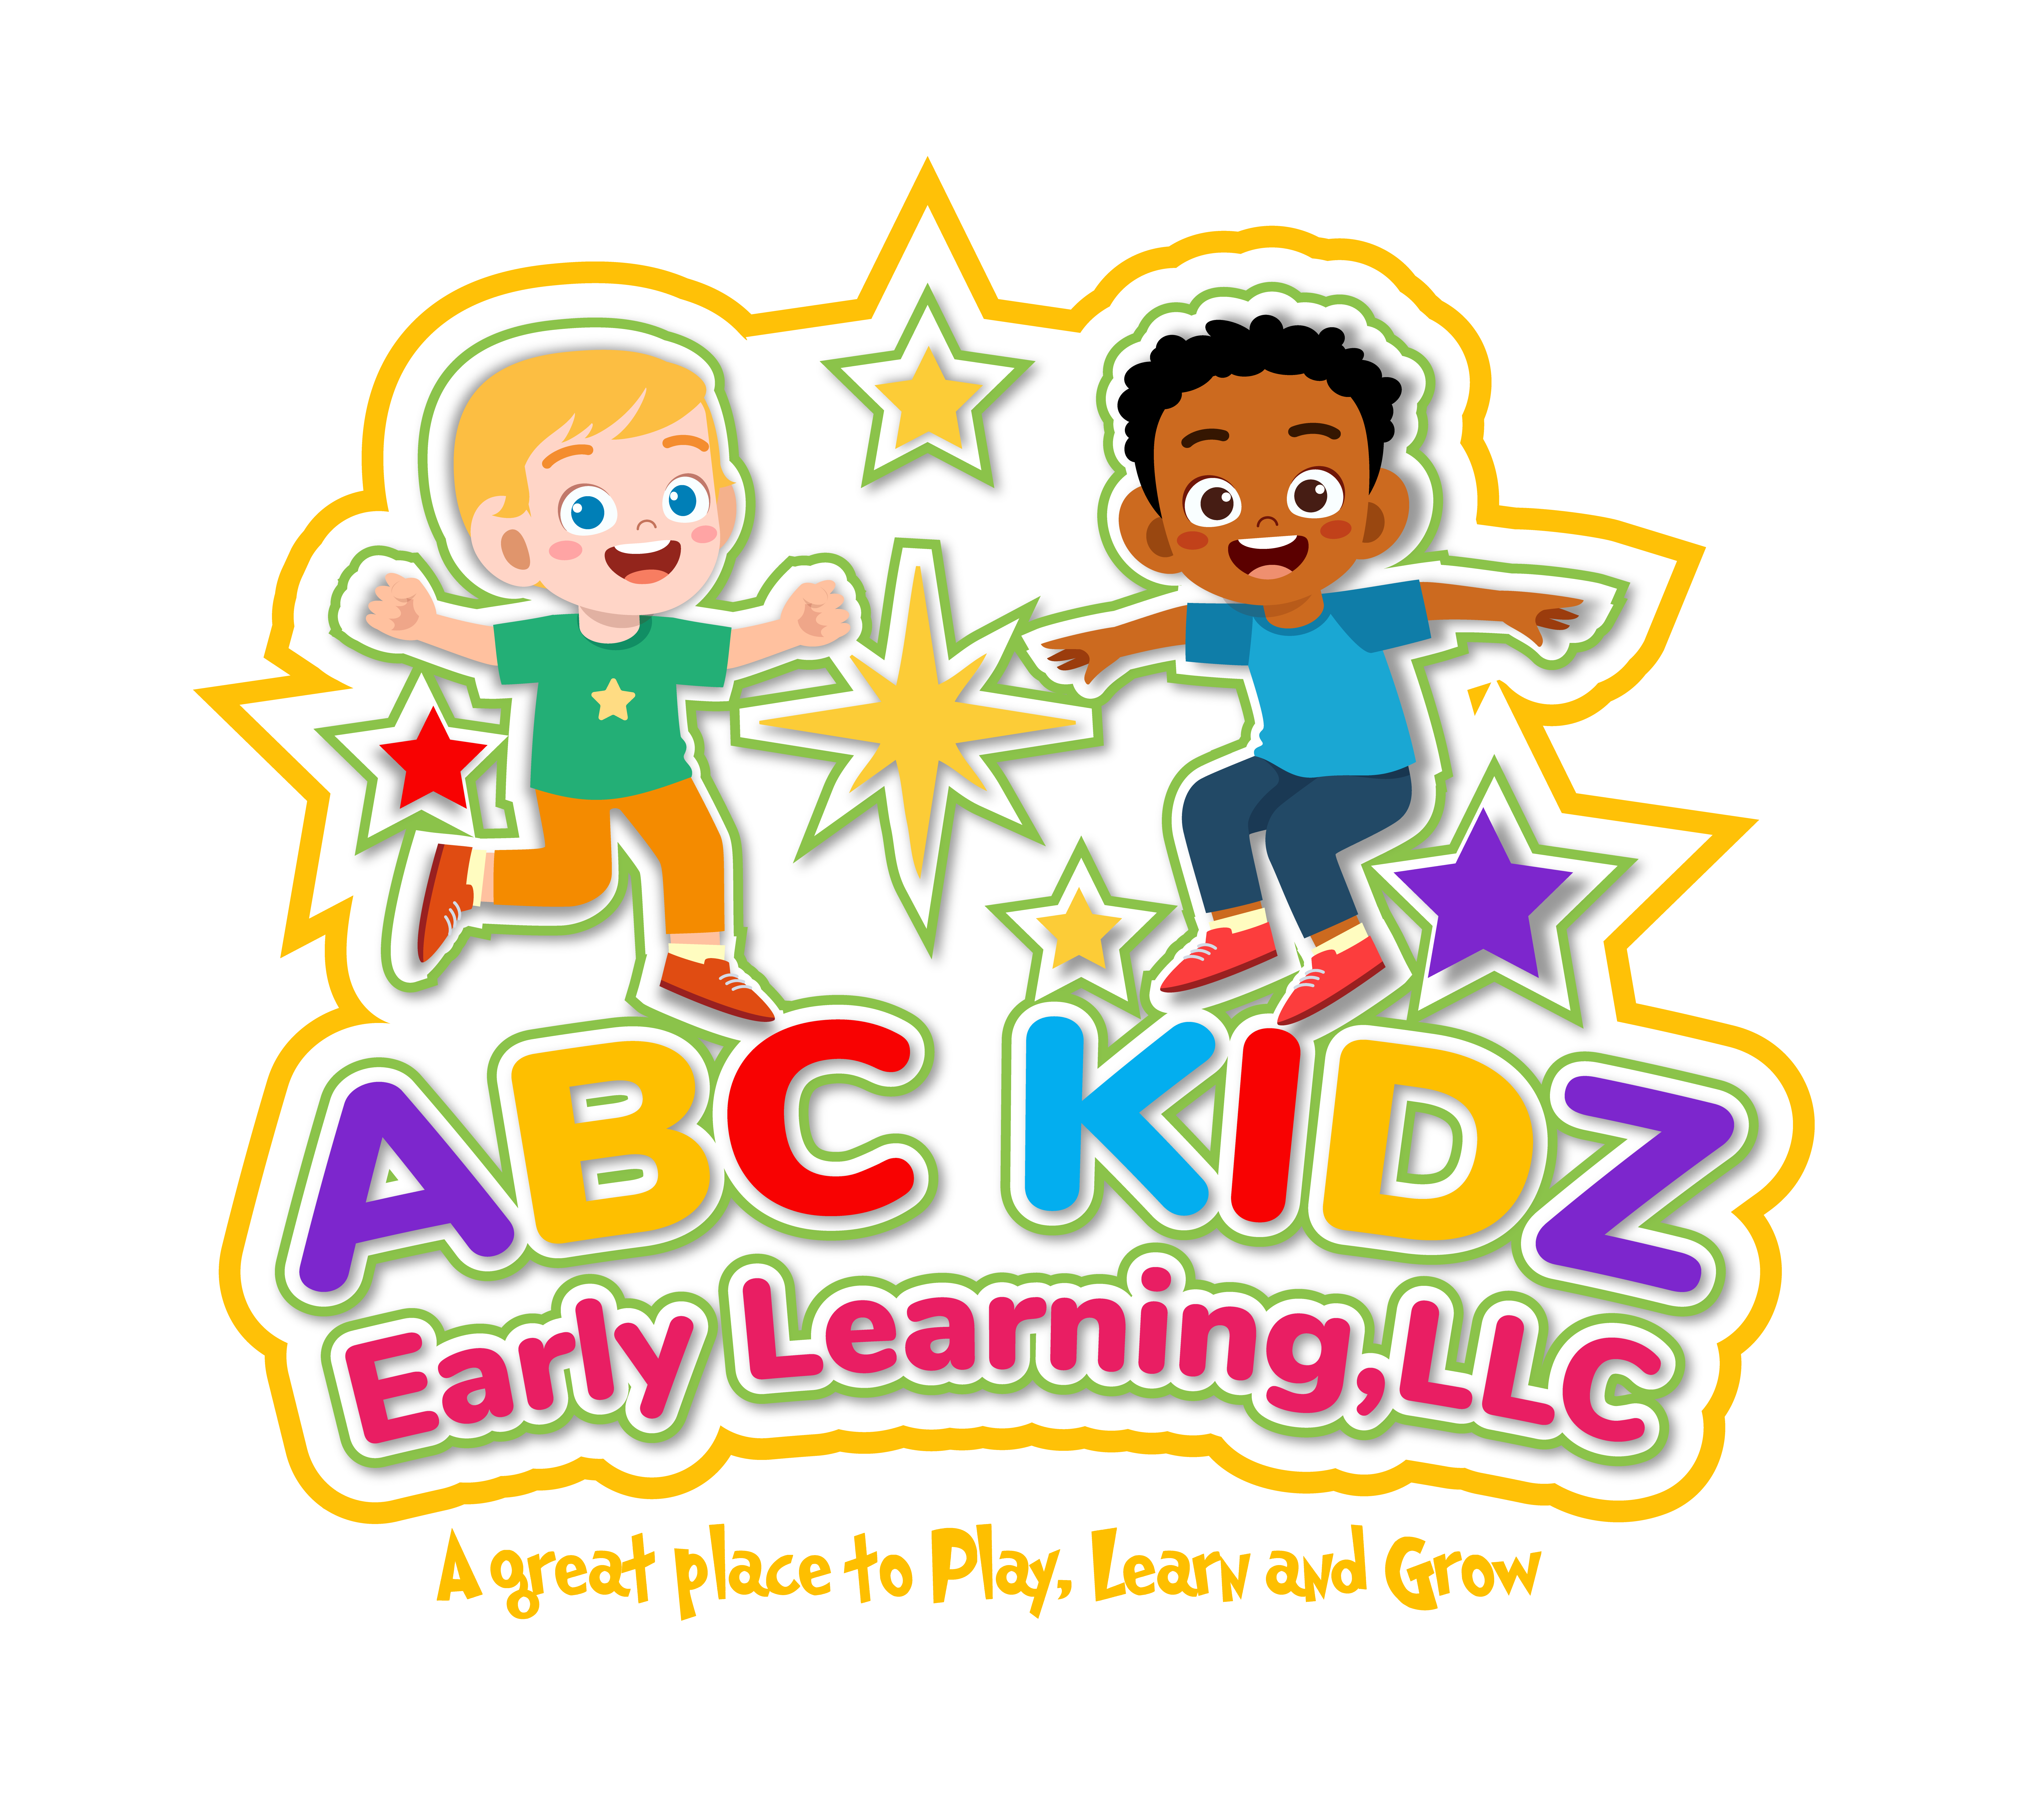 ABC KIDZ Early Learning, LLC